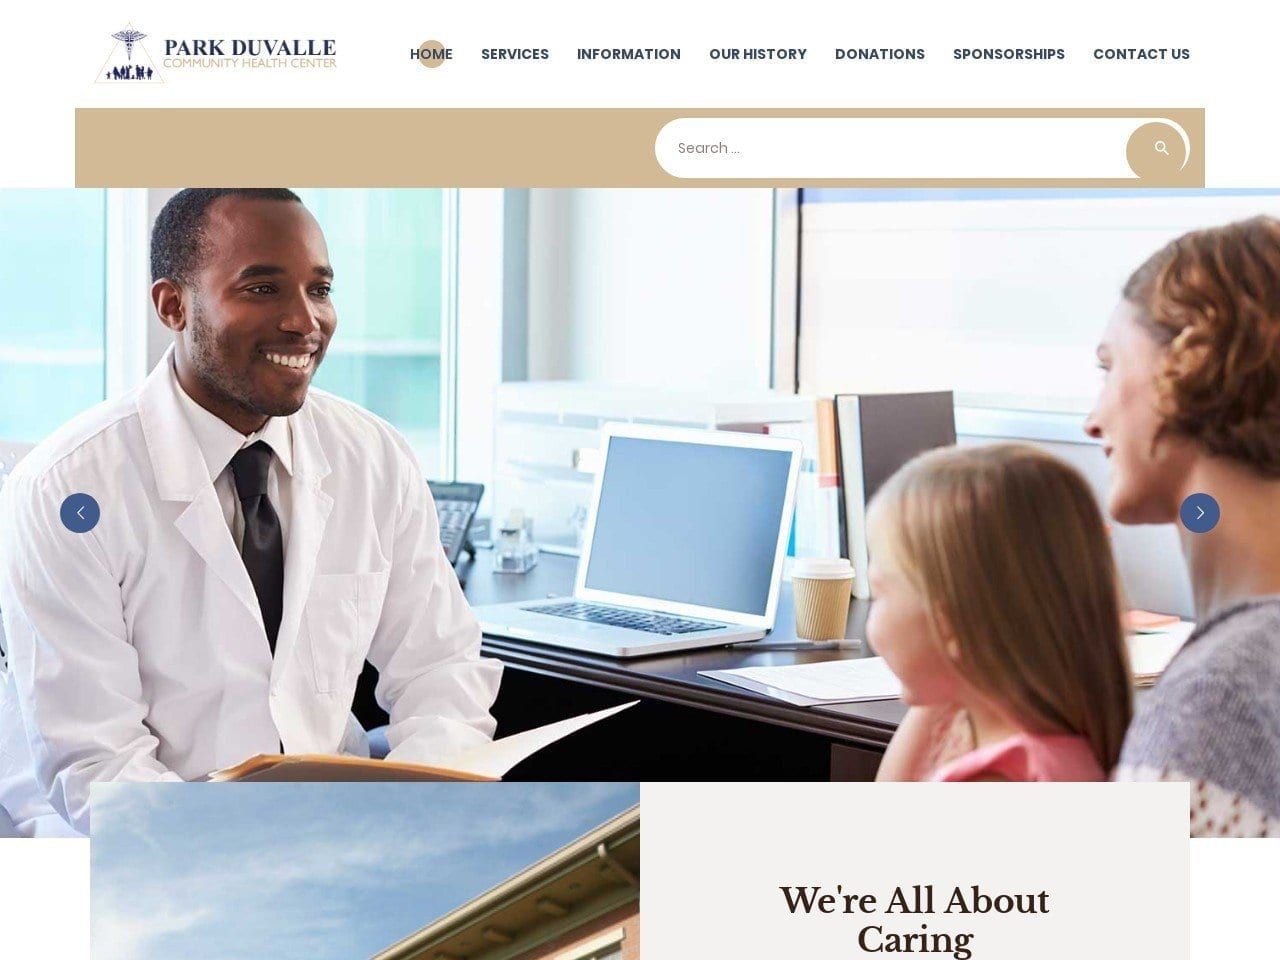 Park Duvalle Community Health Center Website Screenshot from pdchc.org